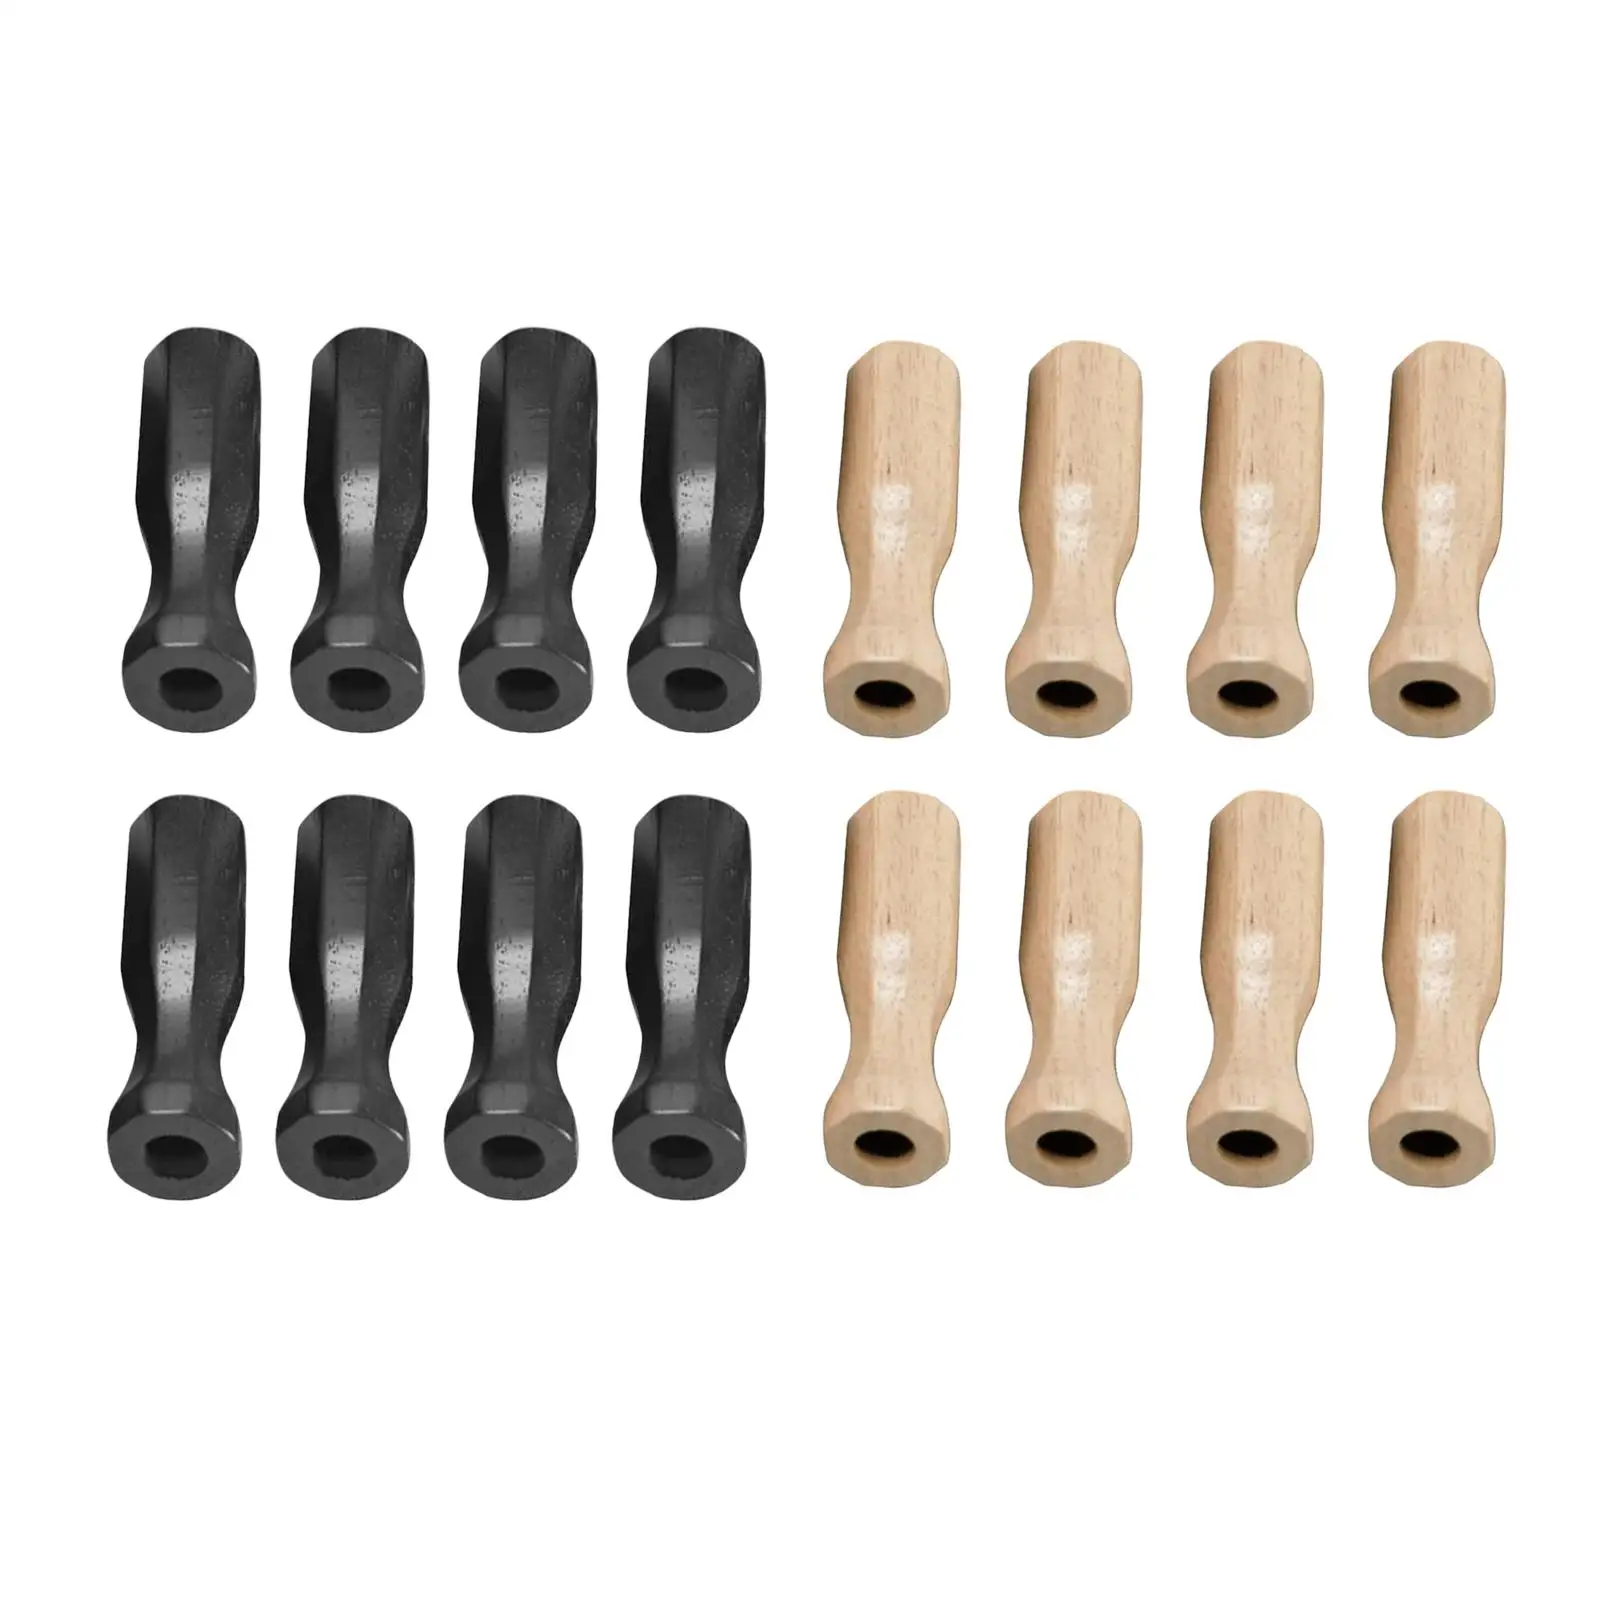 8x foosball table handles accessories wooden foosball handle replacement